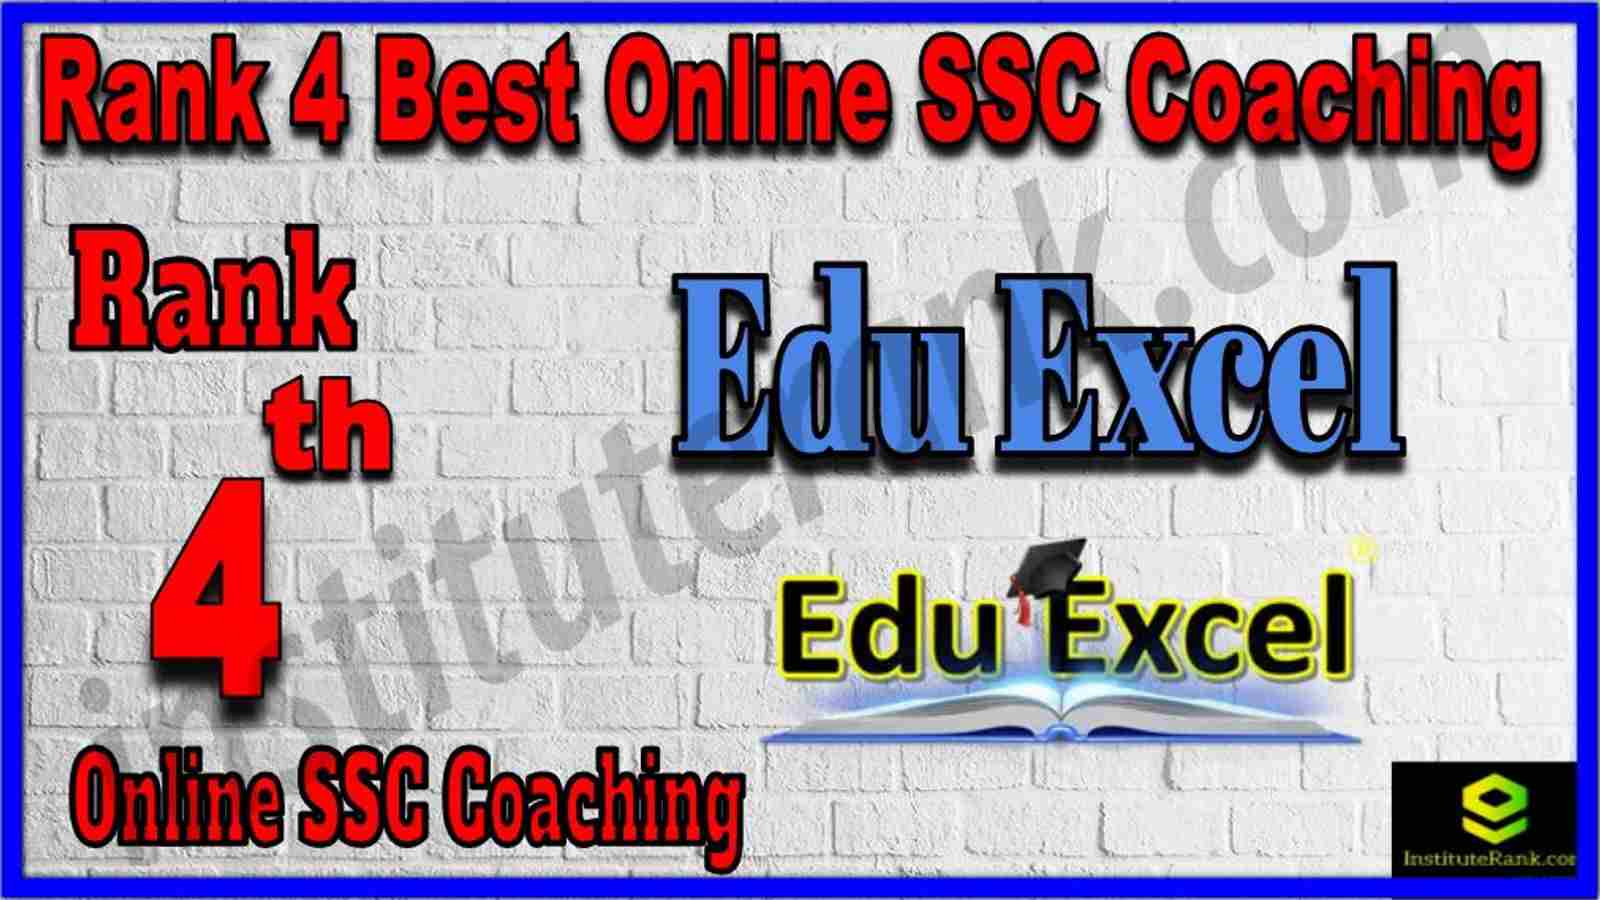 Rank 4 Best Online SSC Coaching